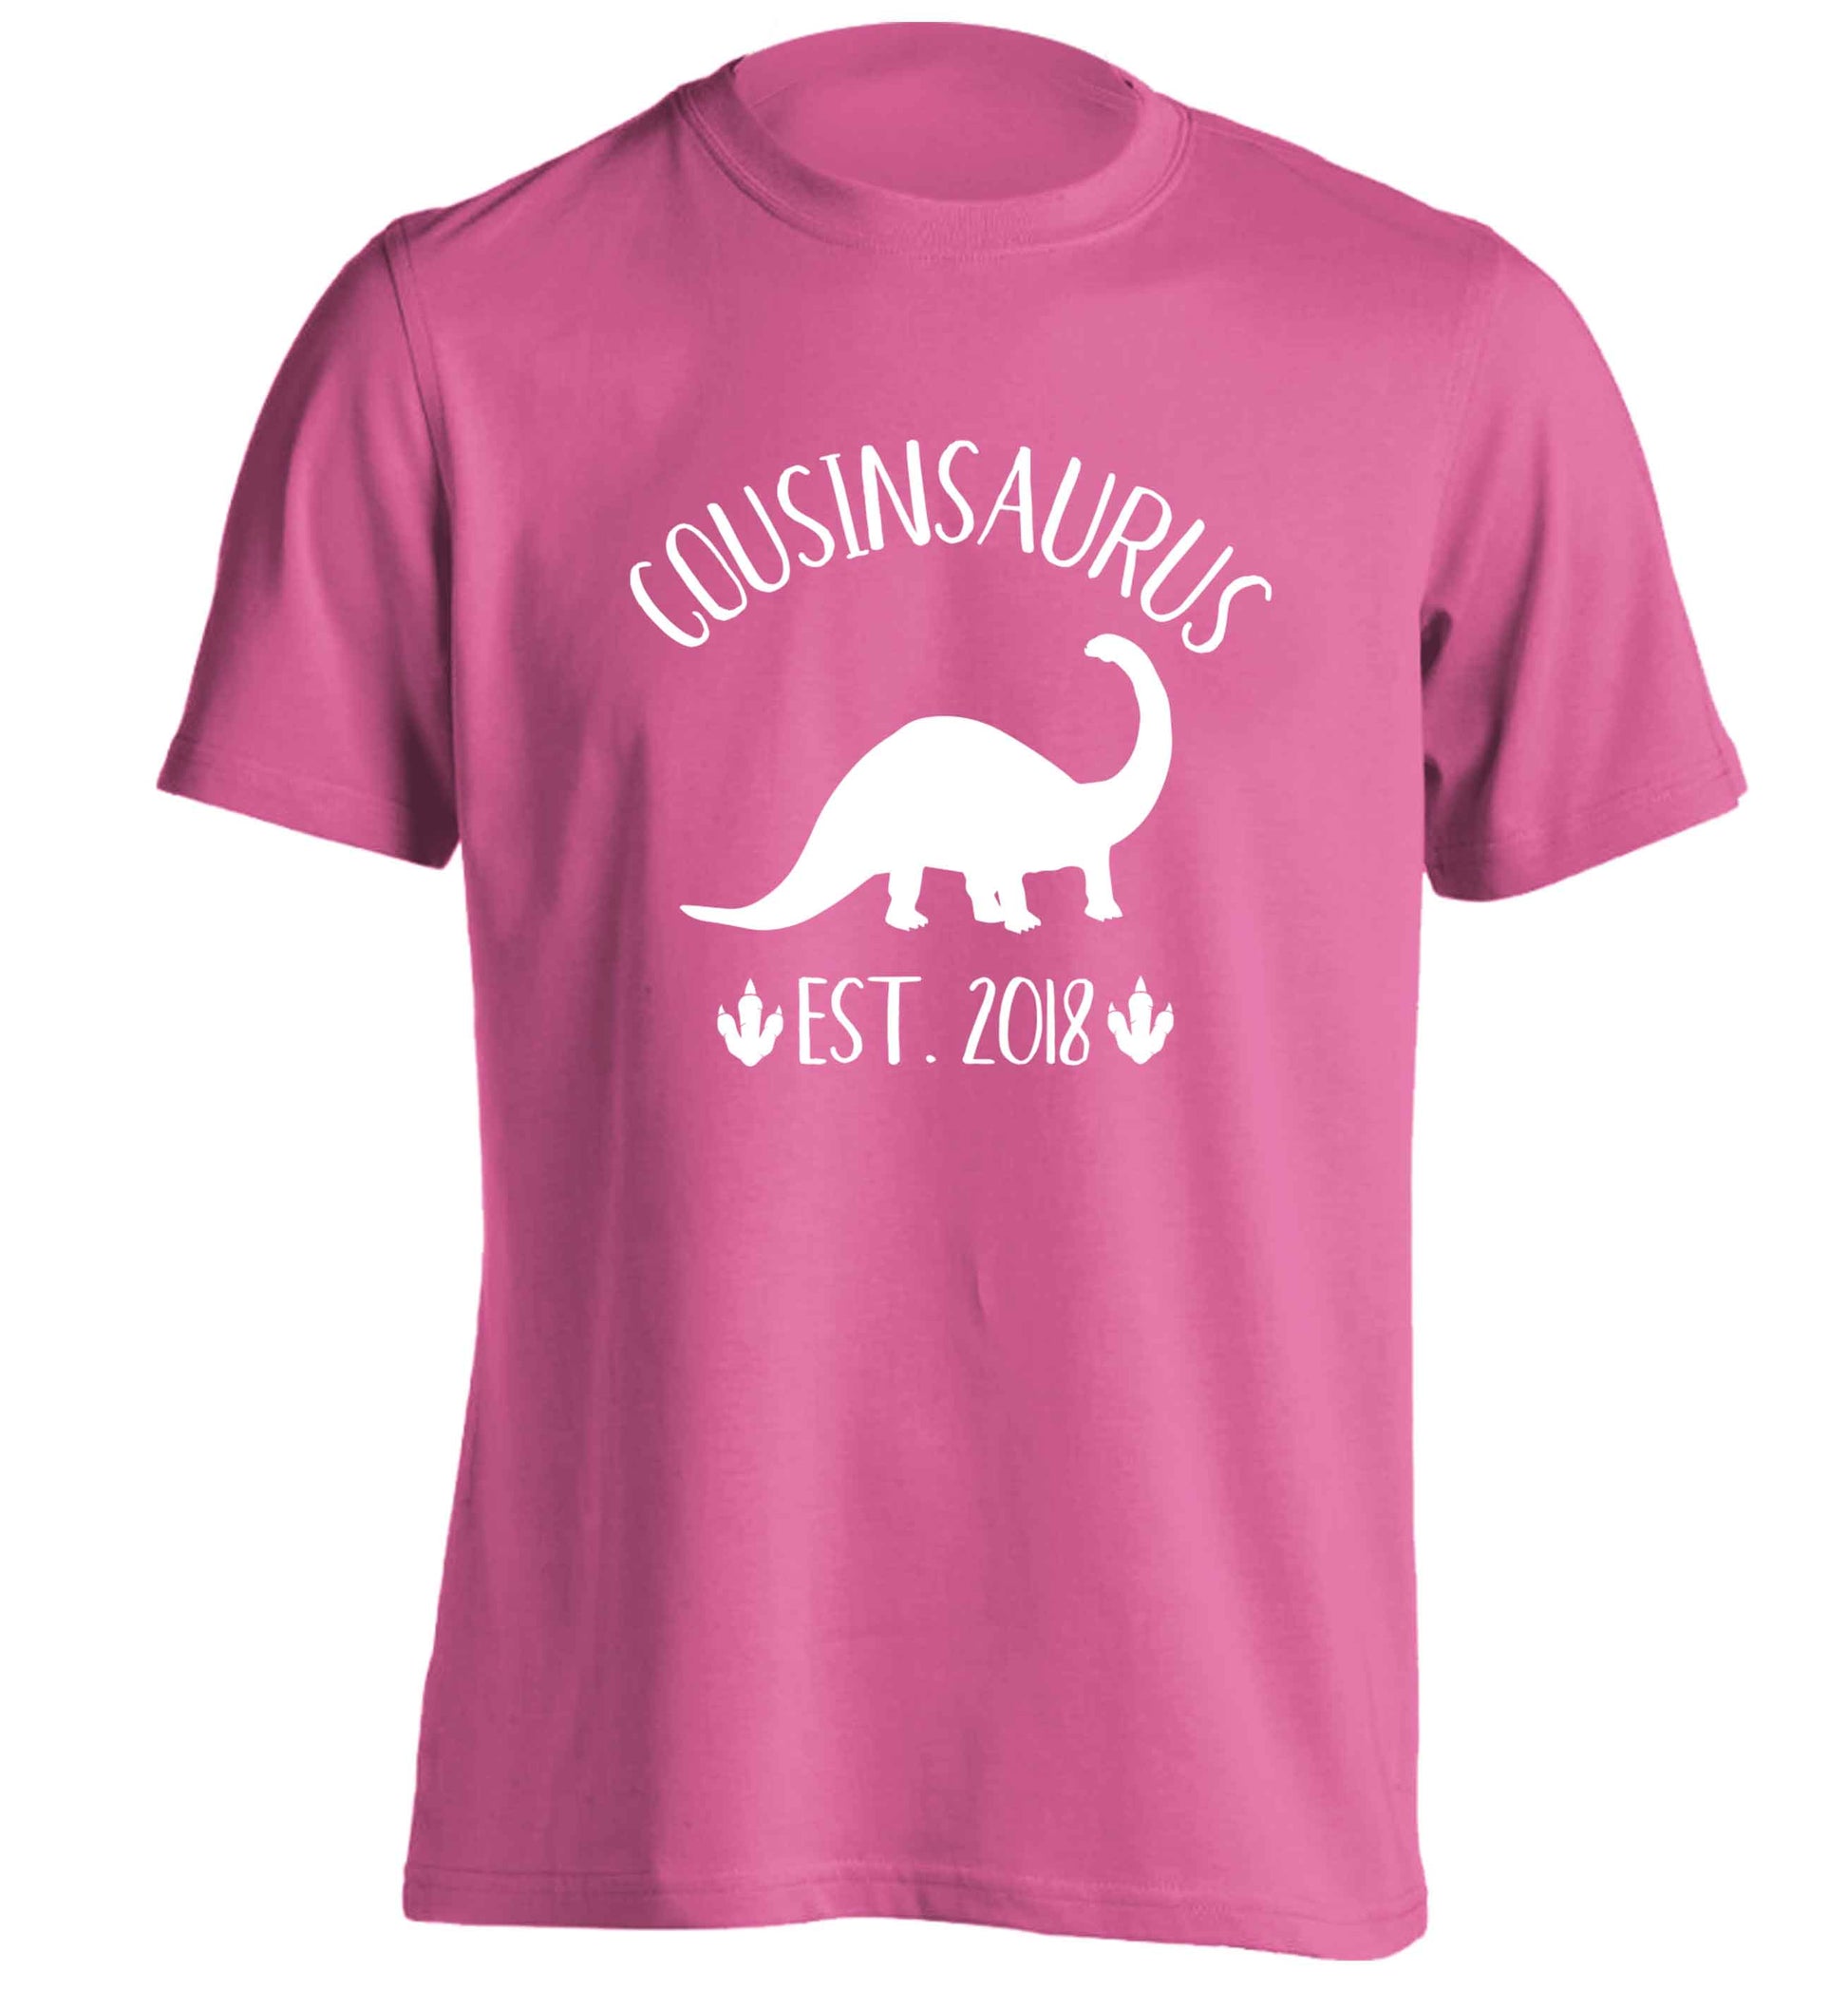 Personalised cousinsaurus since (custom date) adults unisex pink Tshirt 2XL